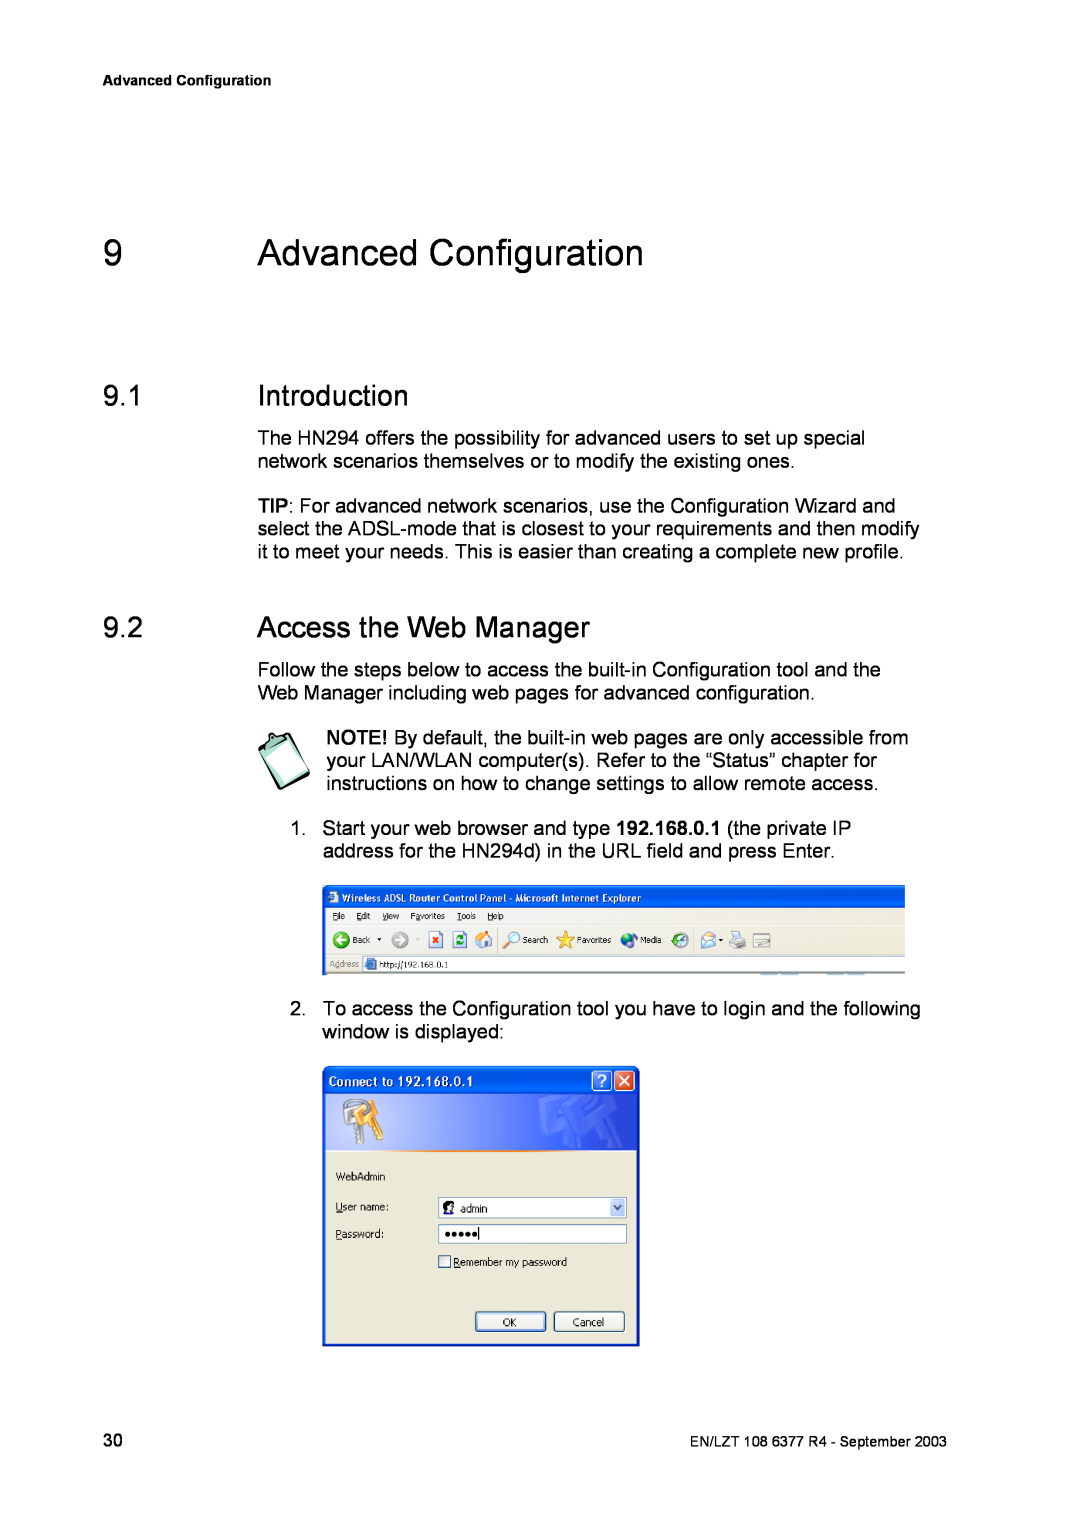 Garmin HN294DP/DI manual Advanced Configuration, Introduction, Access the Web Manager 